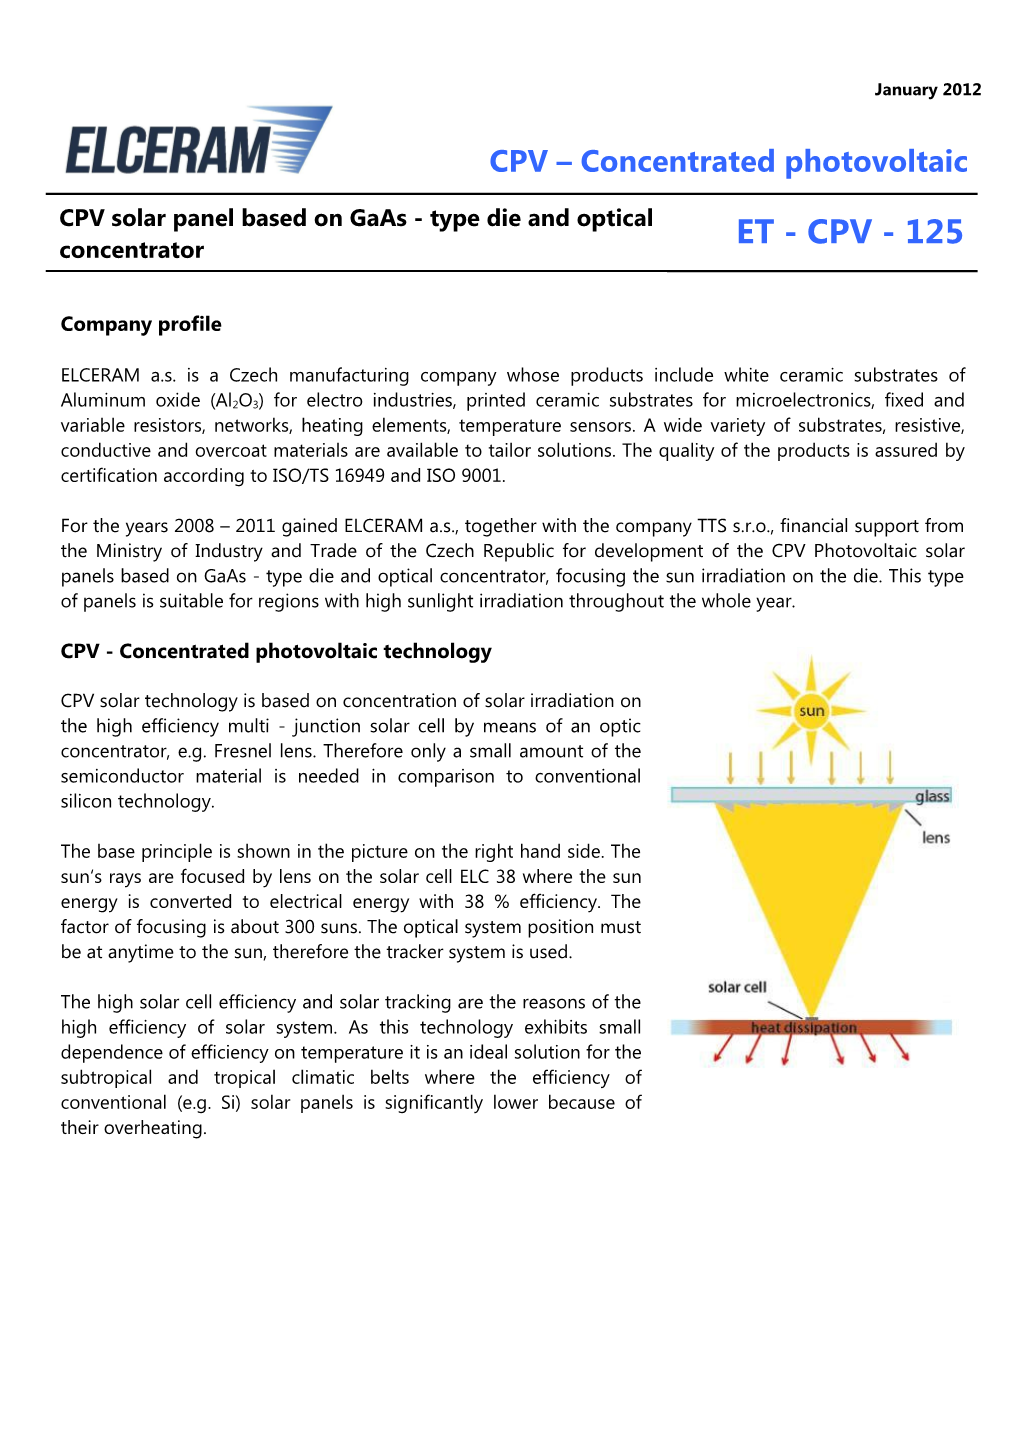 CPV (Concentrated Photovoltaic Systems) - Vývoj Fotovoltaických Panelů Nové Generace V